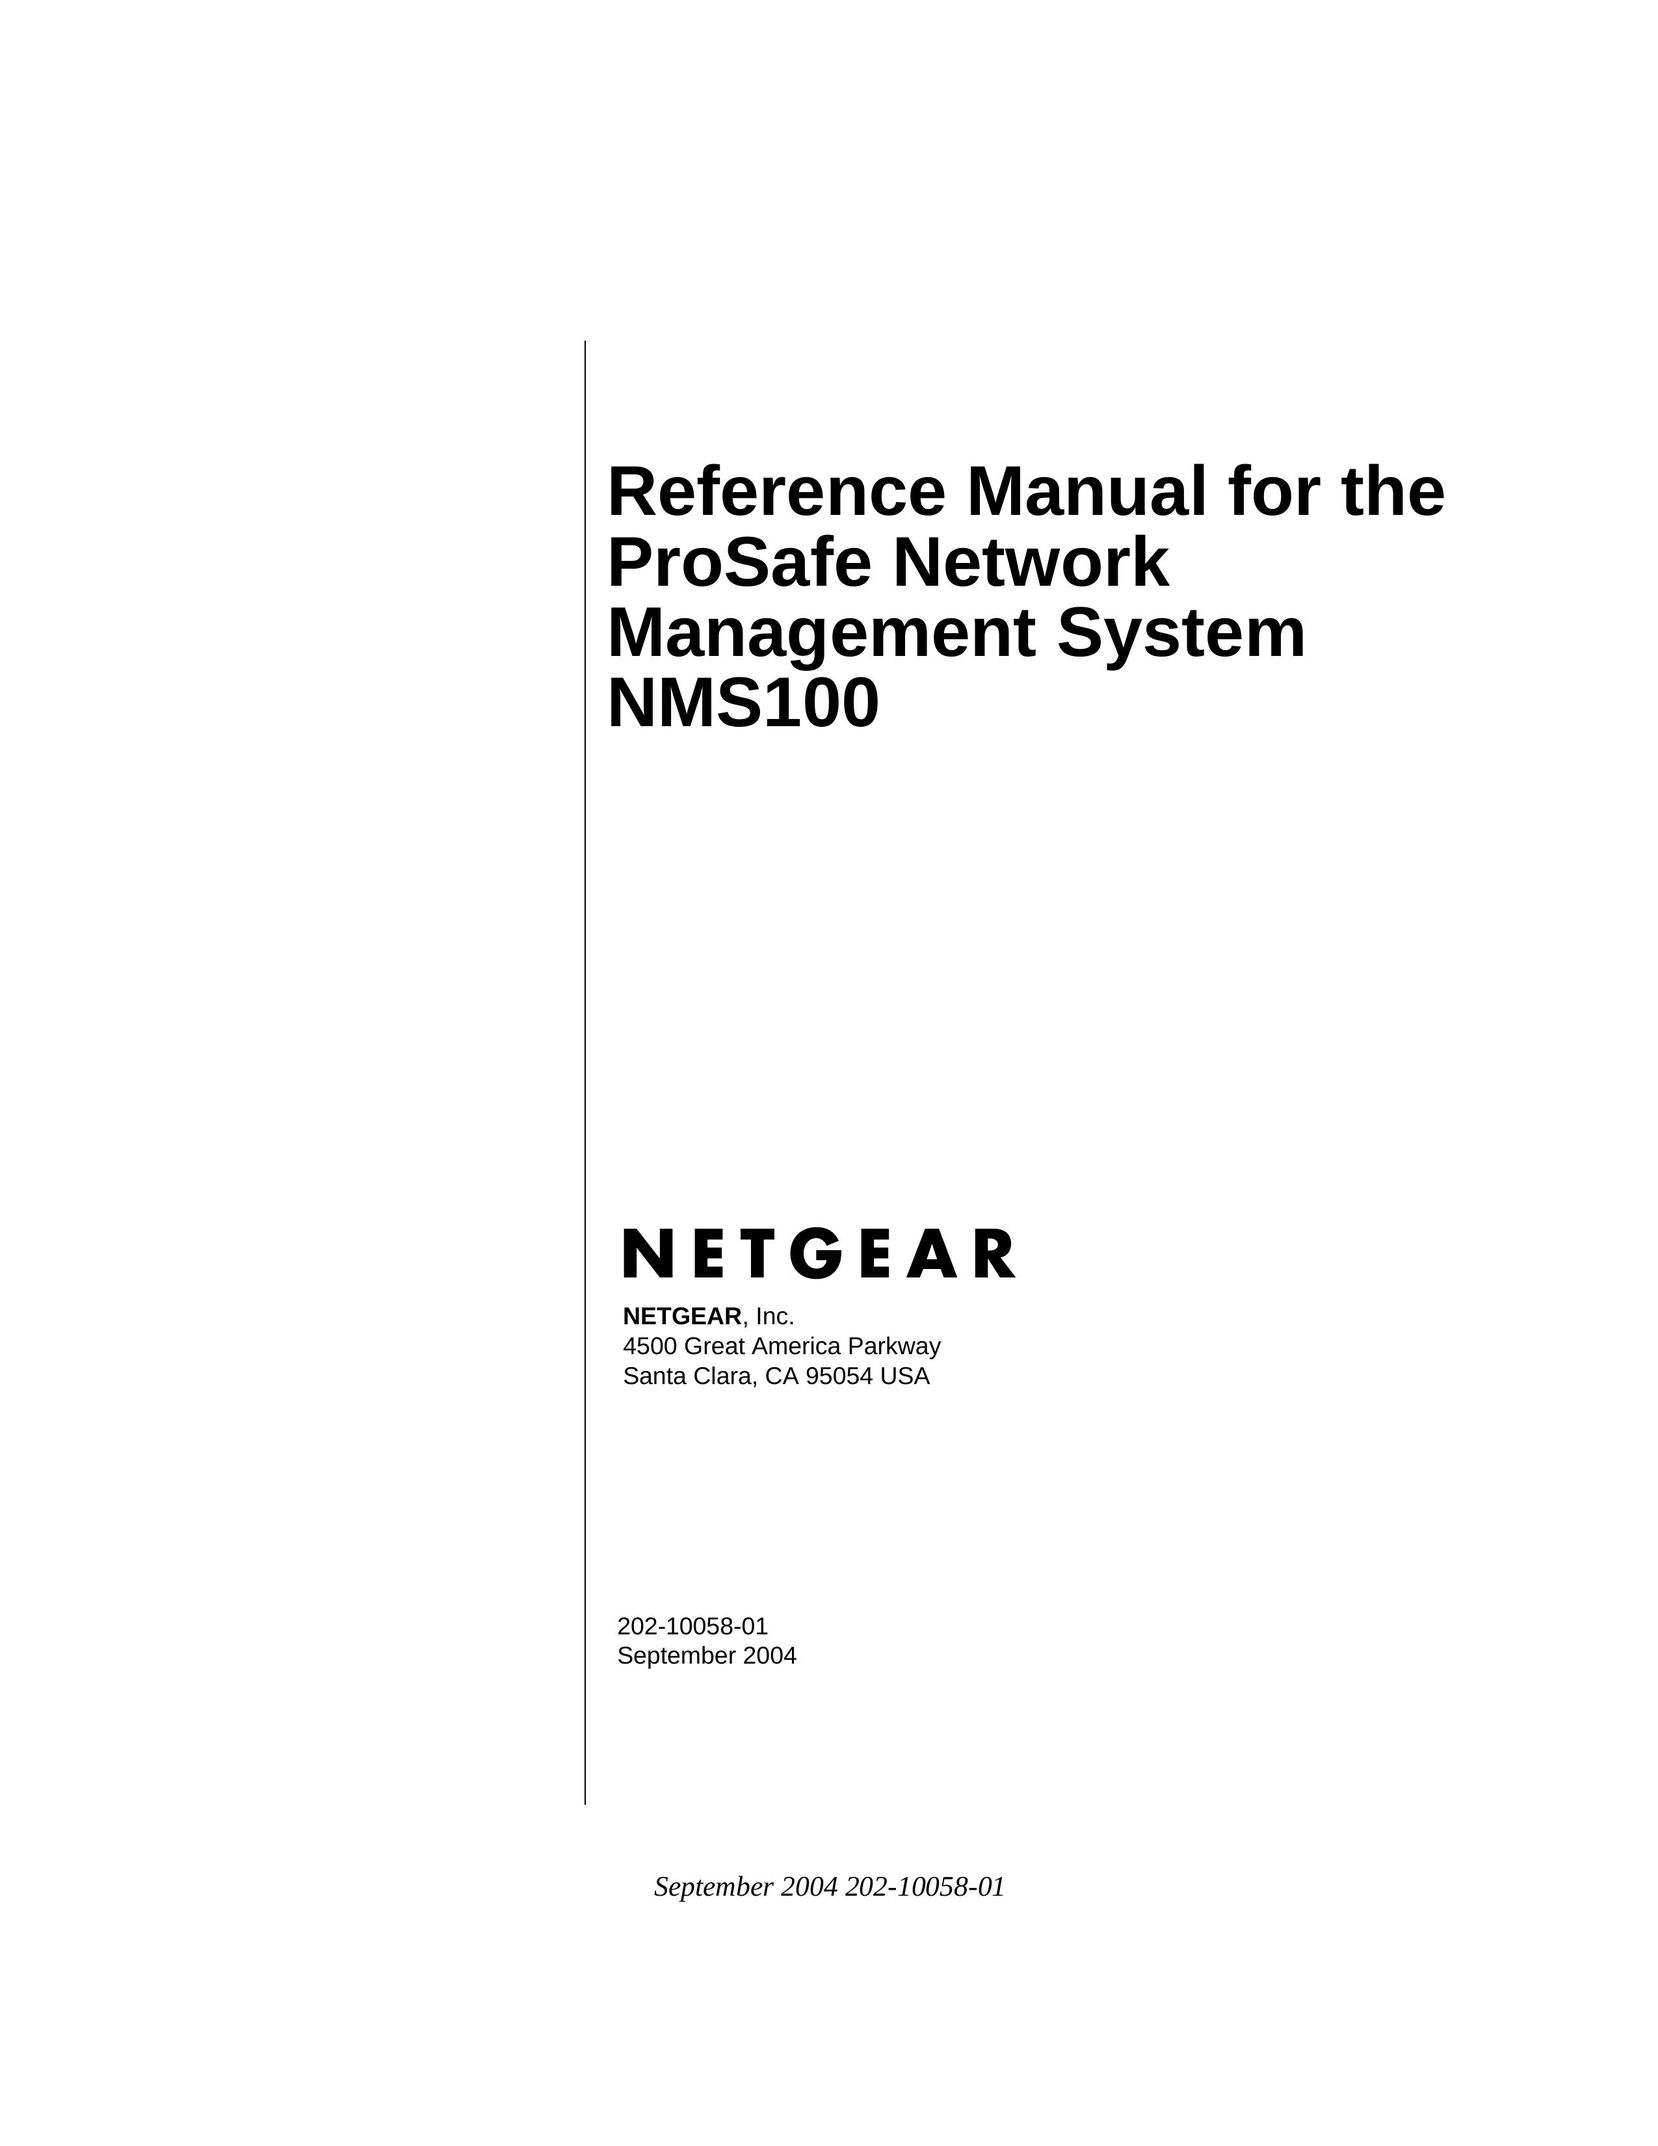 NETGEAR NMS100 Network Card User Manual